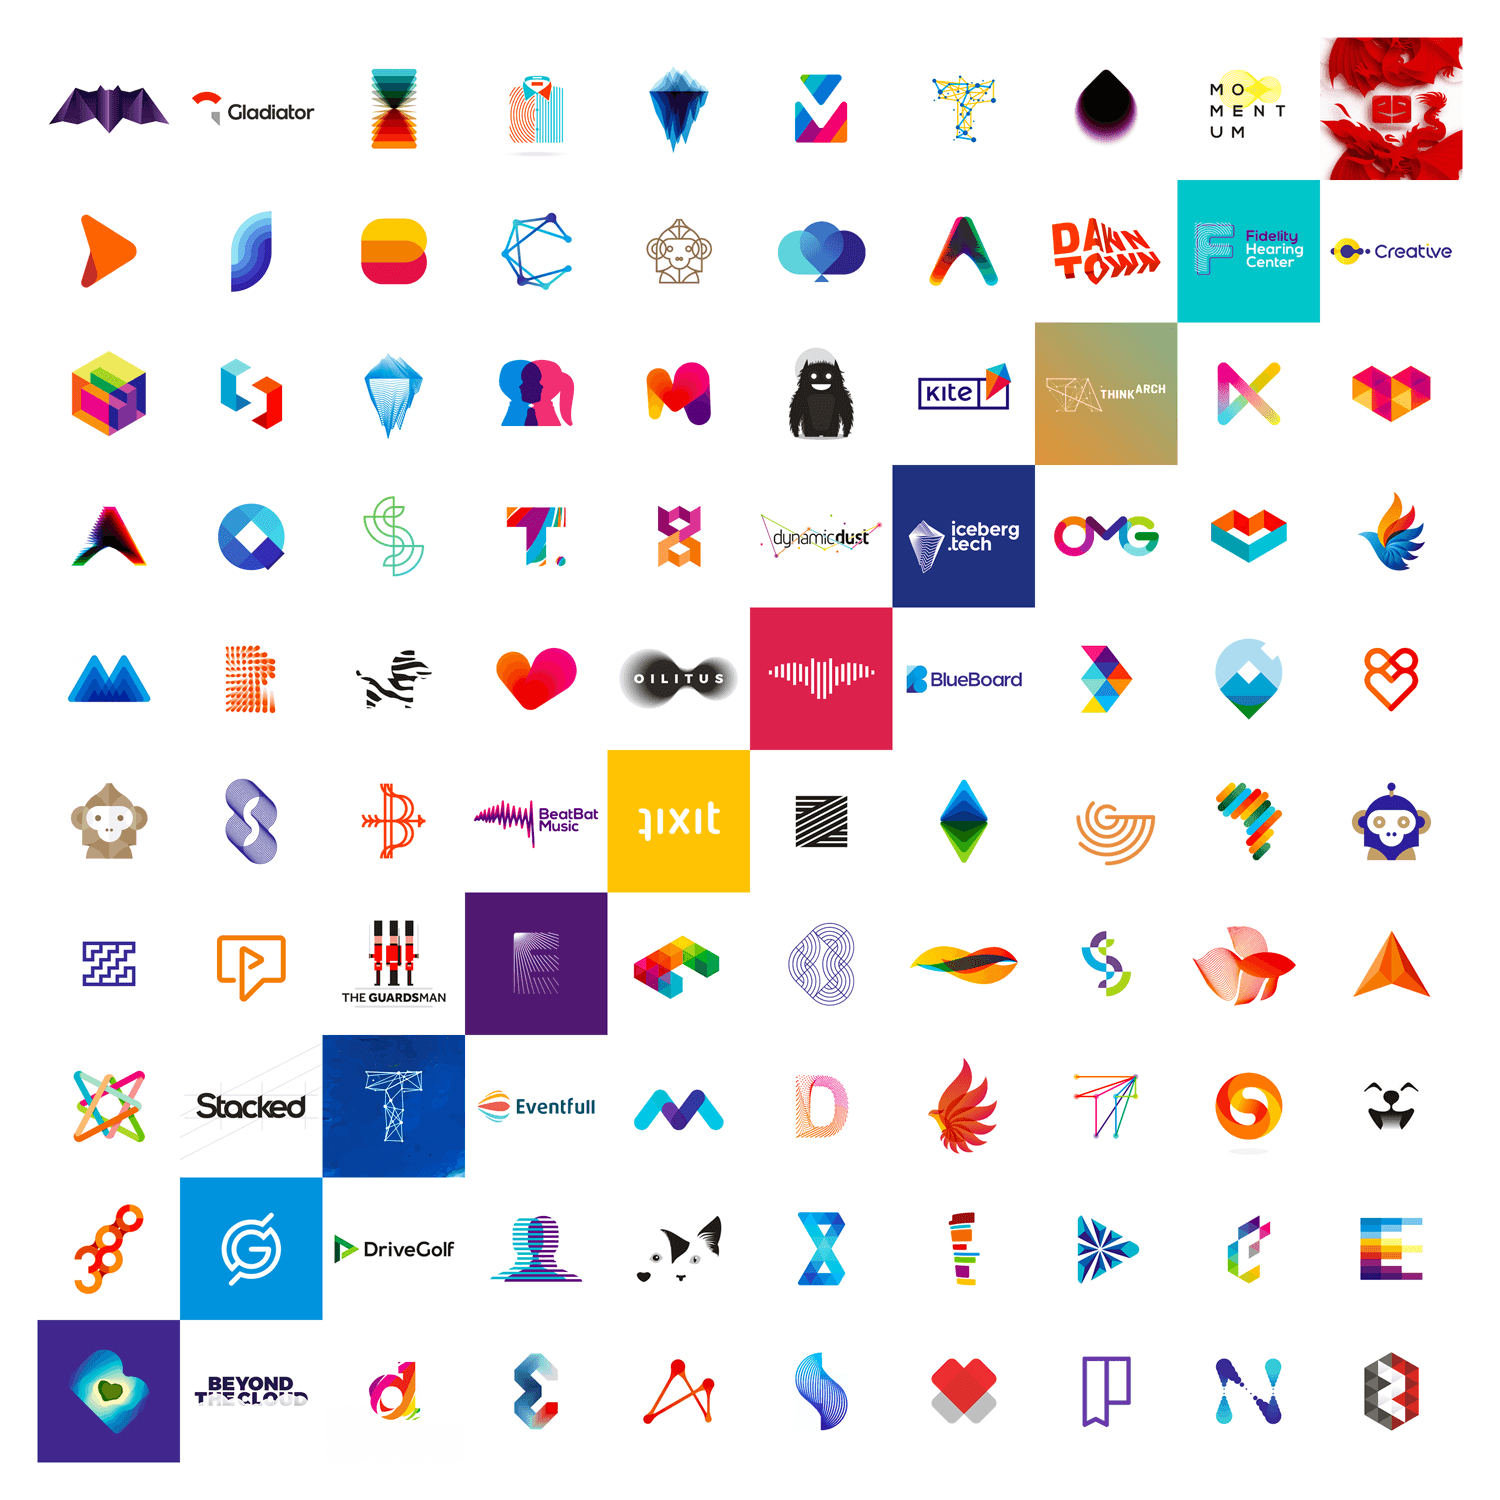 100 Pics Logo - Logo design by Alex Tass | 10 years, 100 logo design projects - Logo ...